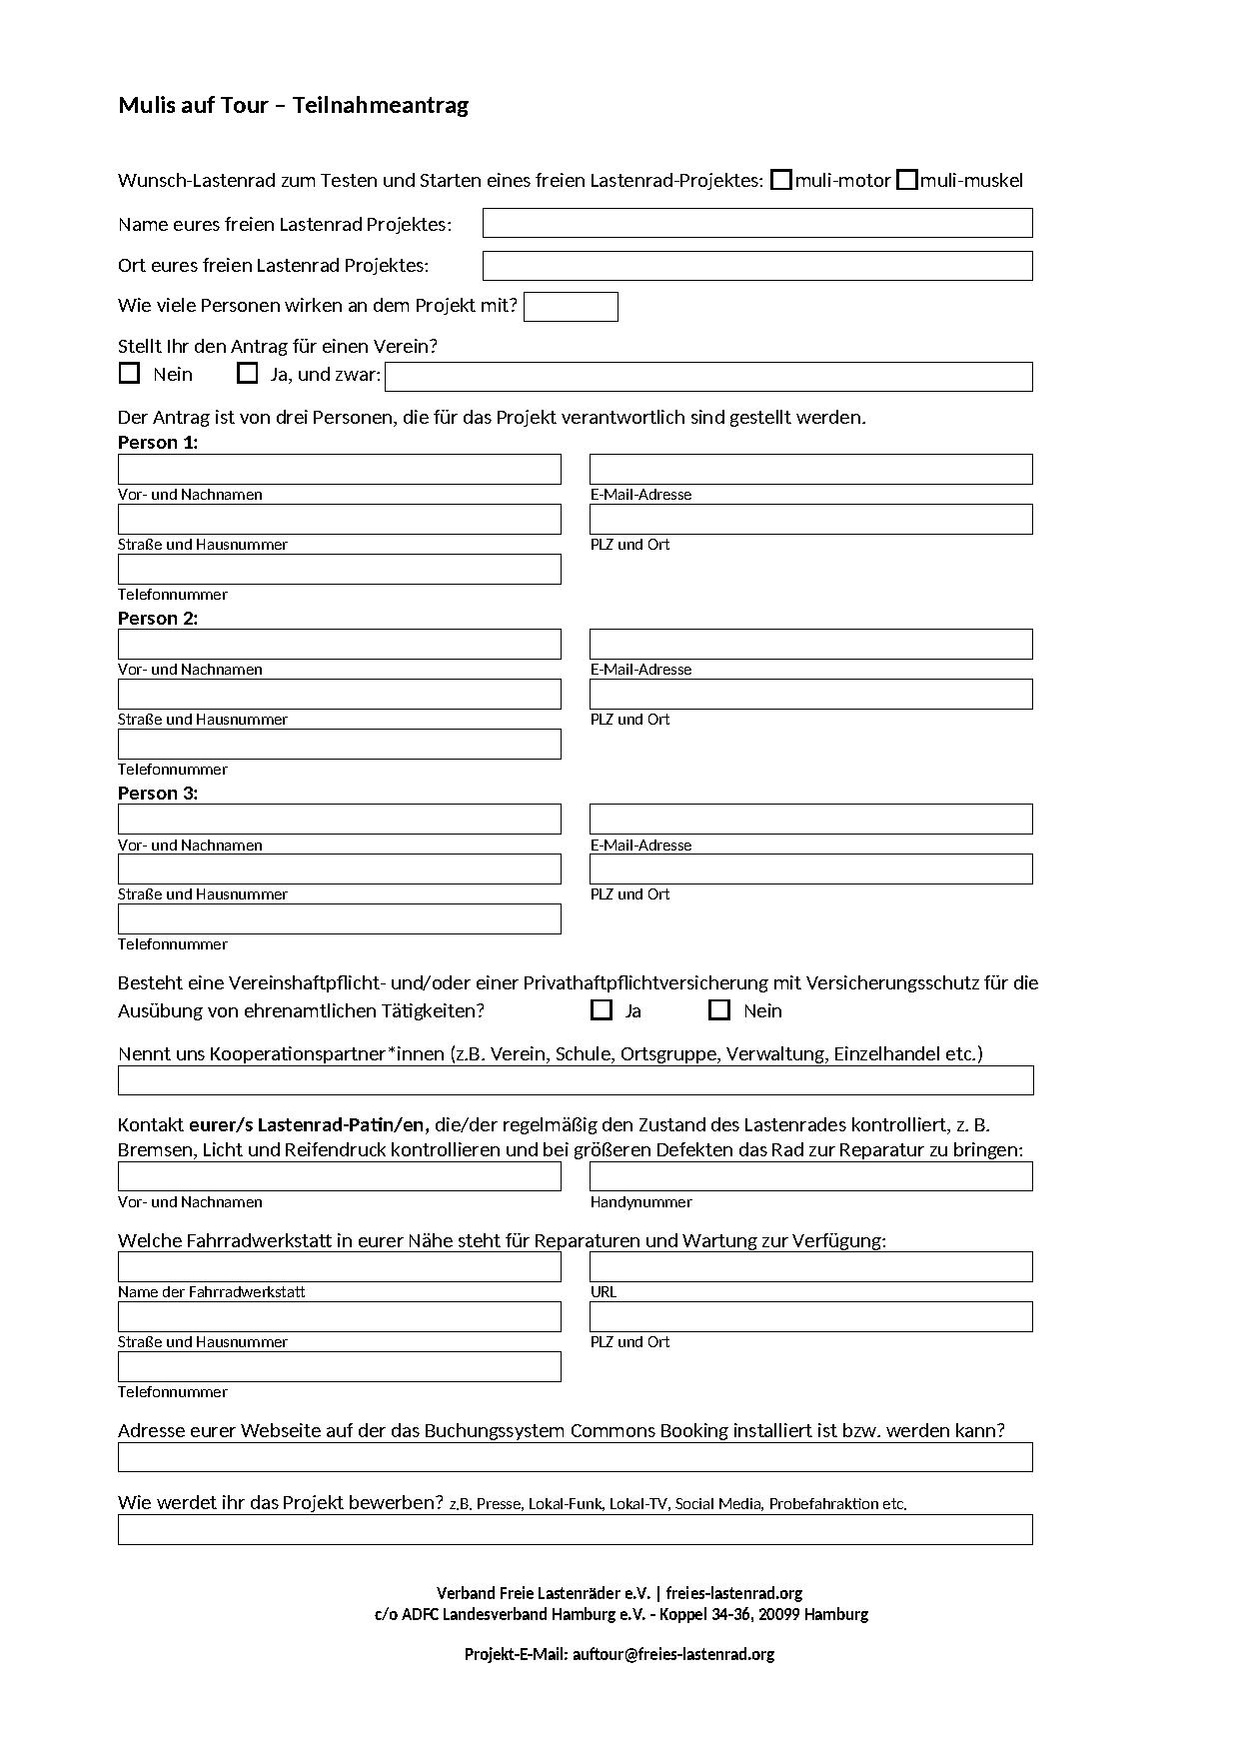 Anlage-1-Teilnahmeantrag-Mulis-auf-Tour-2023-10-31.pdf